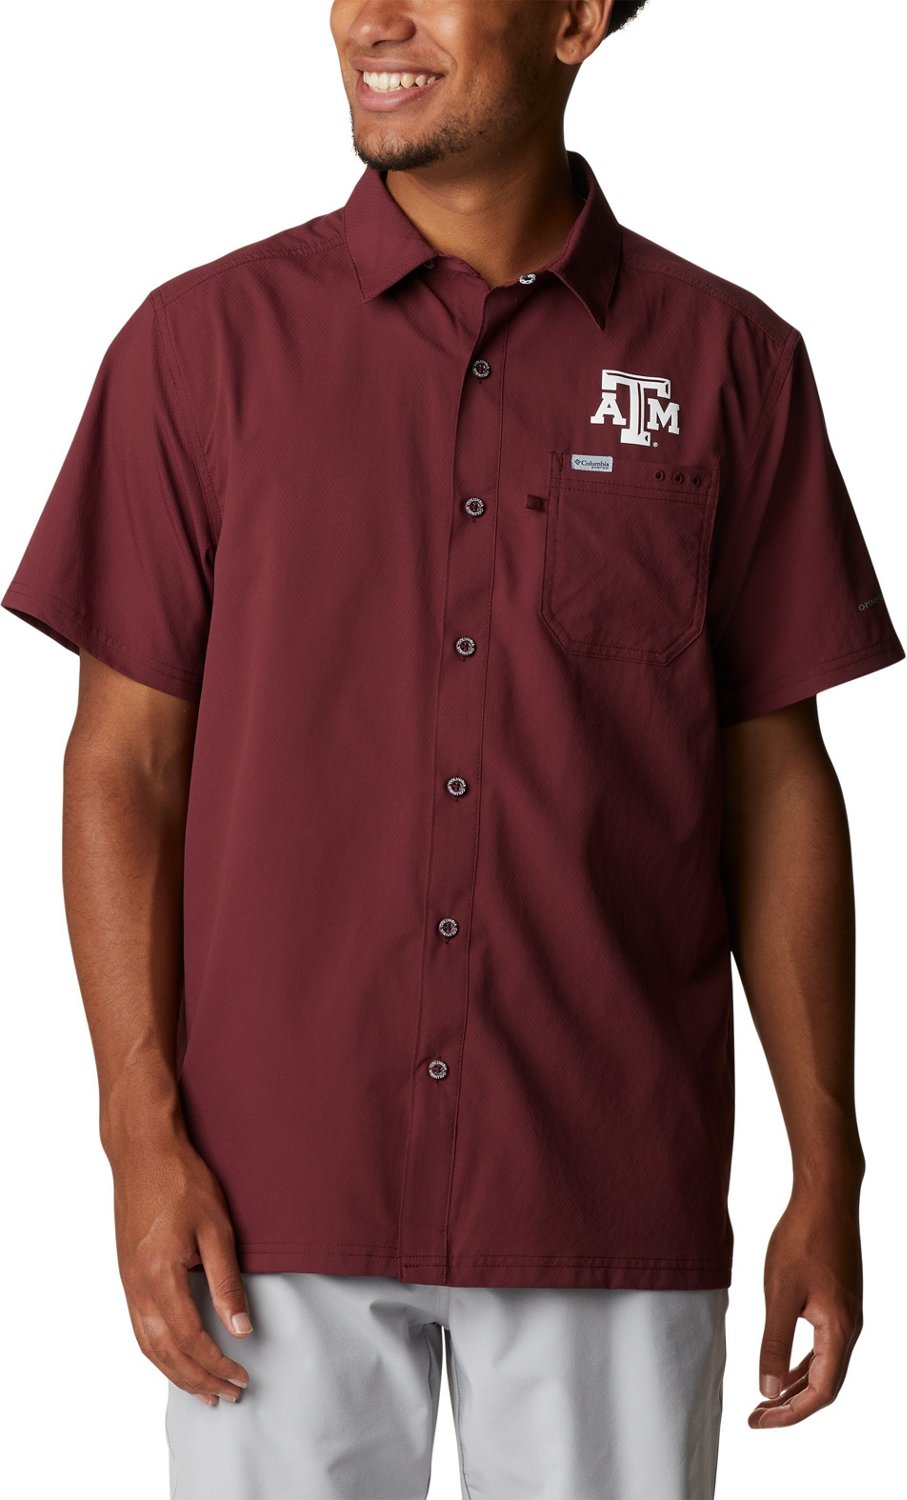 Aggies Collared Shirts | Academy